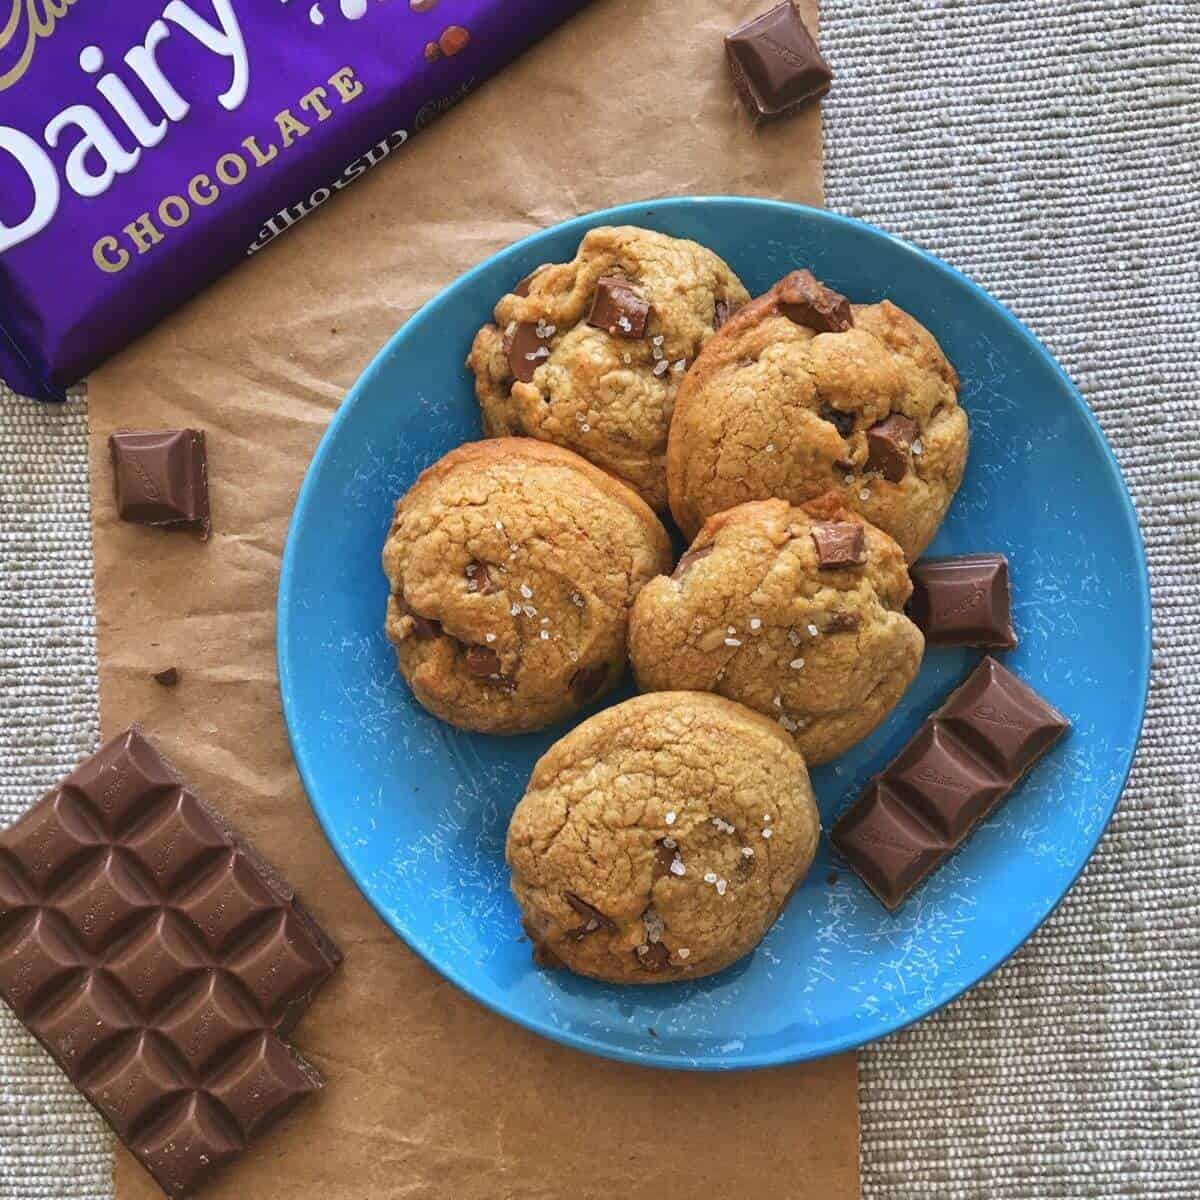 Cadbury Flake Chocolate Chip Cookies, Chocolate chip cookie…